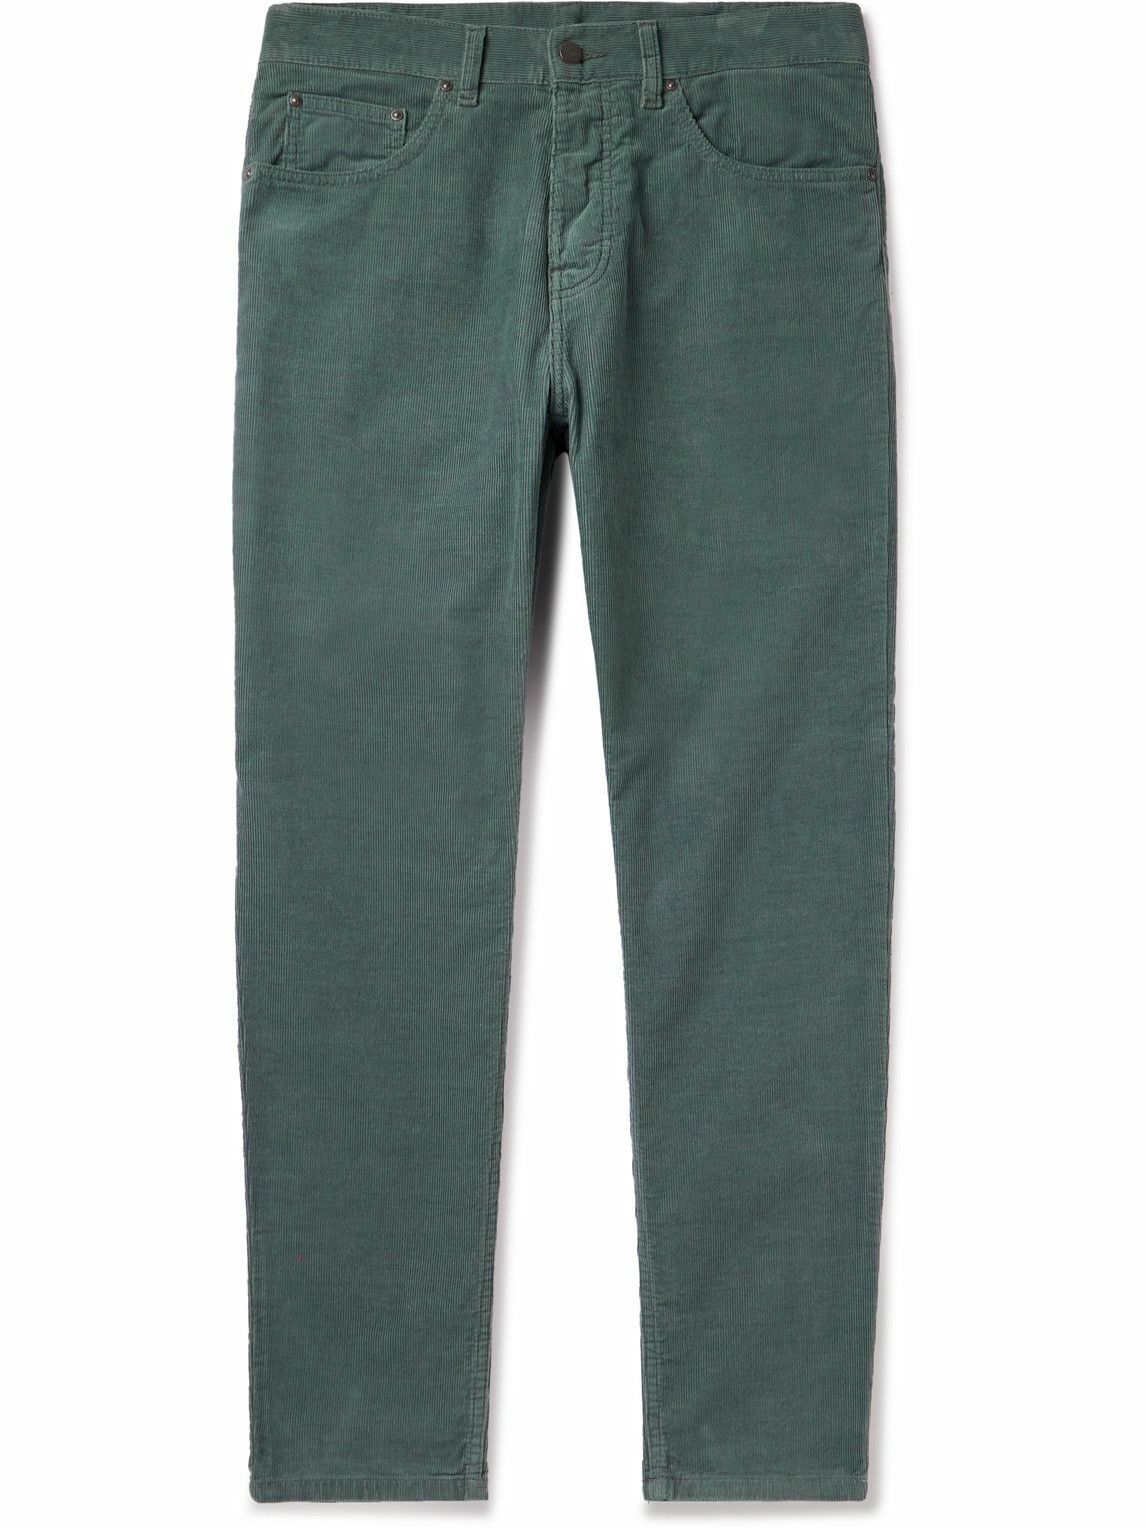 Carhartt WIP - Newel Tapered Cotton-Corduroy Trousers - Green Carhartt WIP